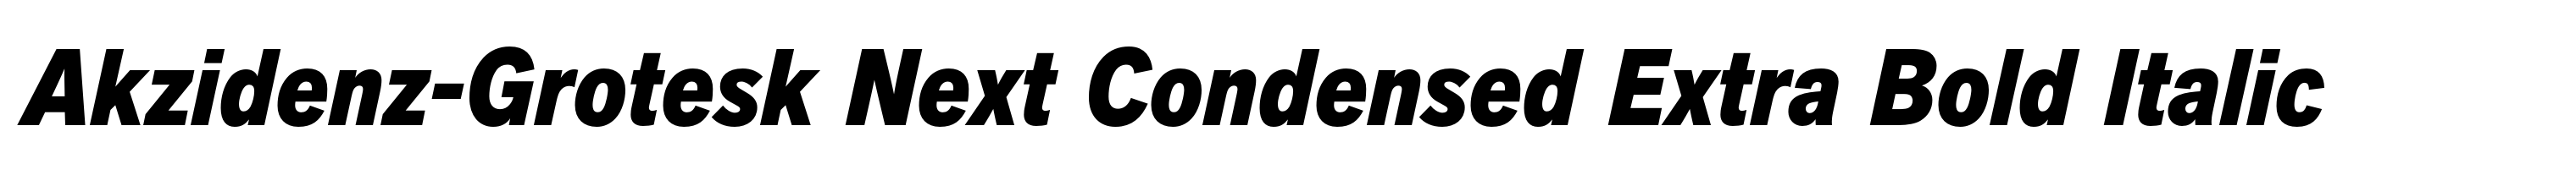 Akzidenz-Grotesk Next Condensed Extra Bold Italic